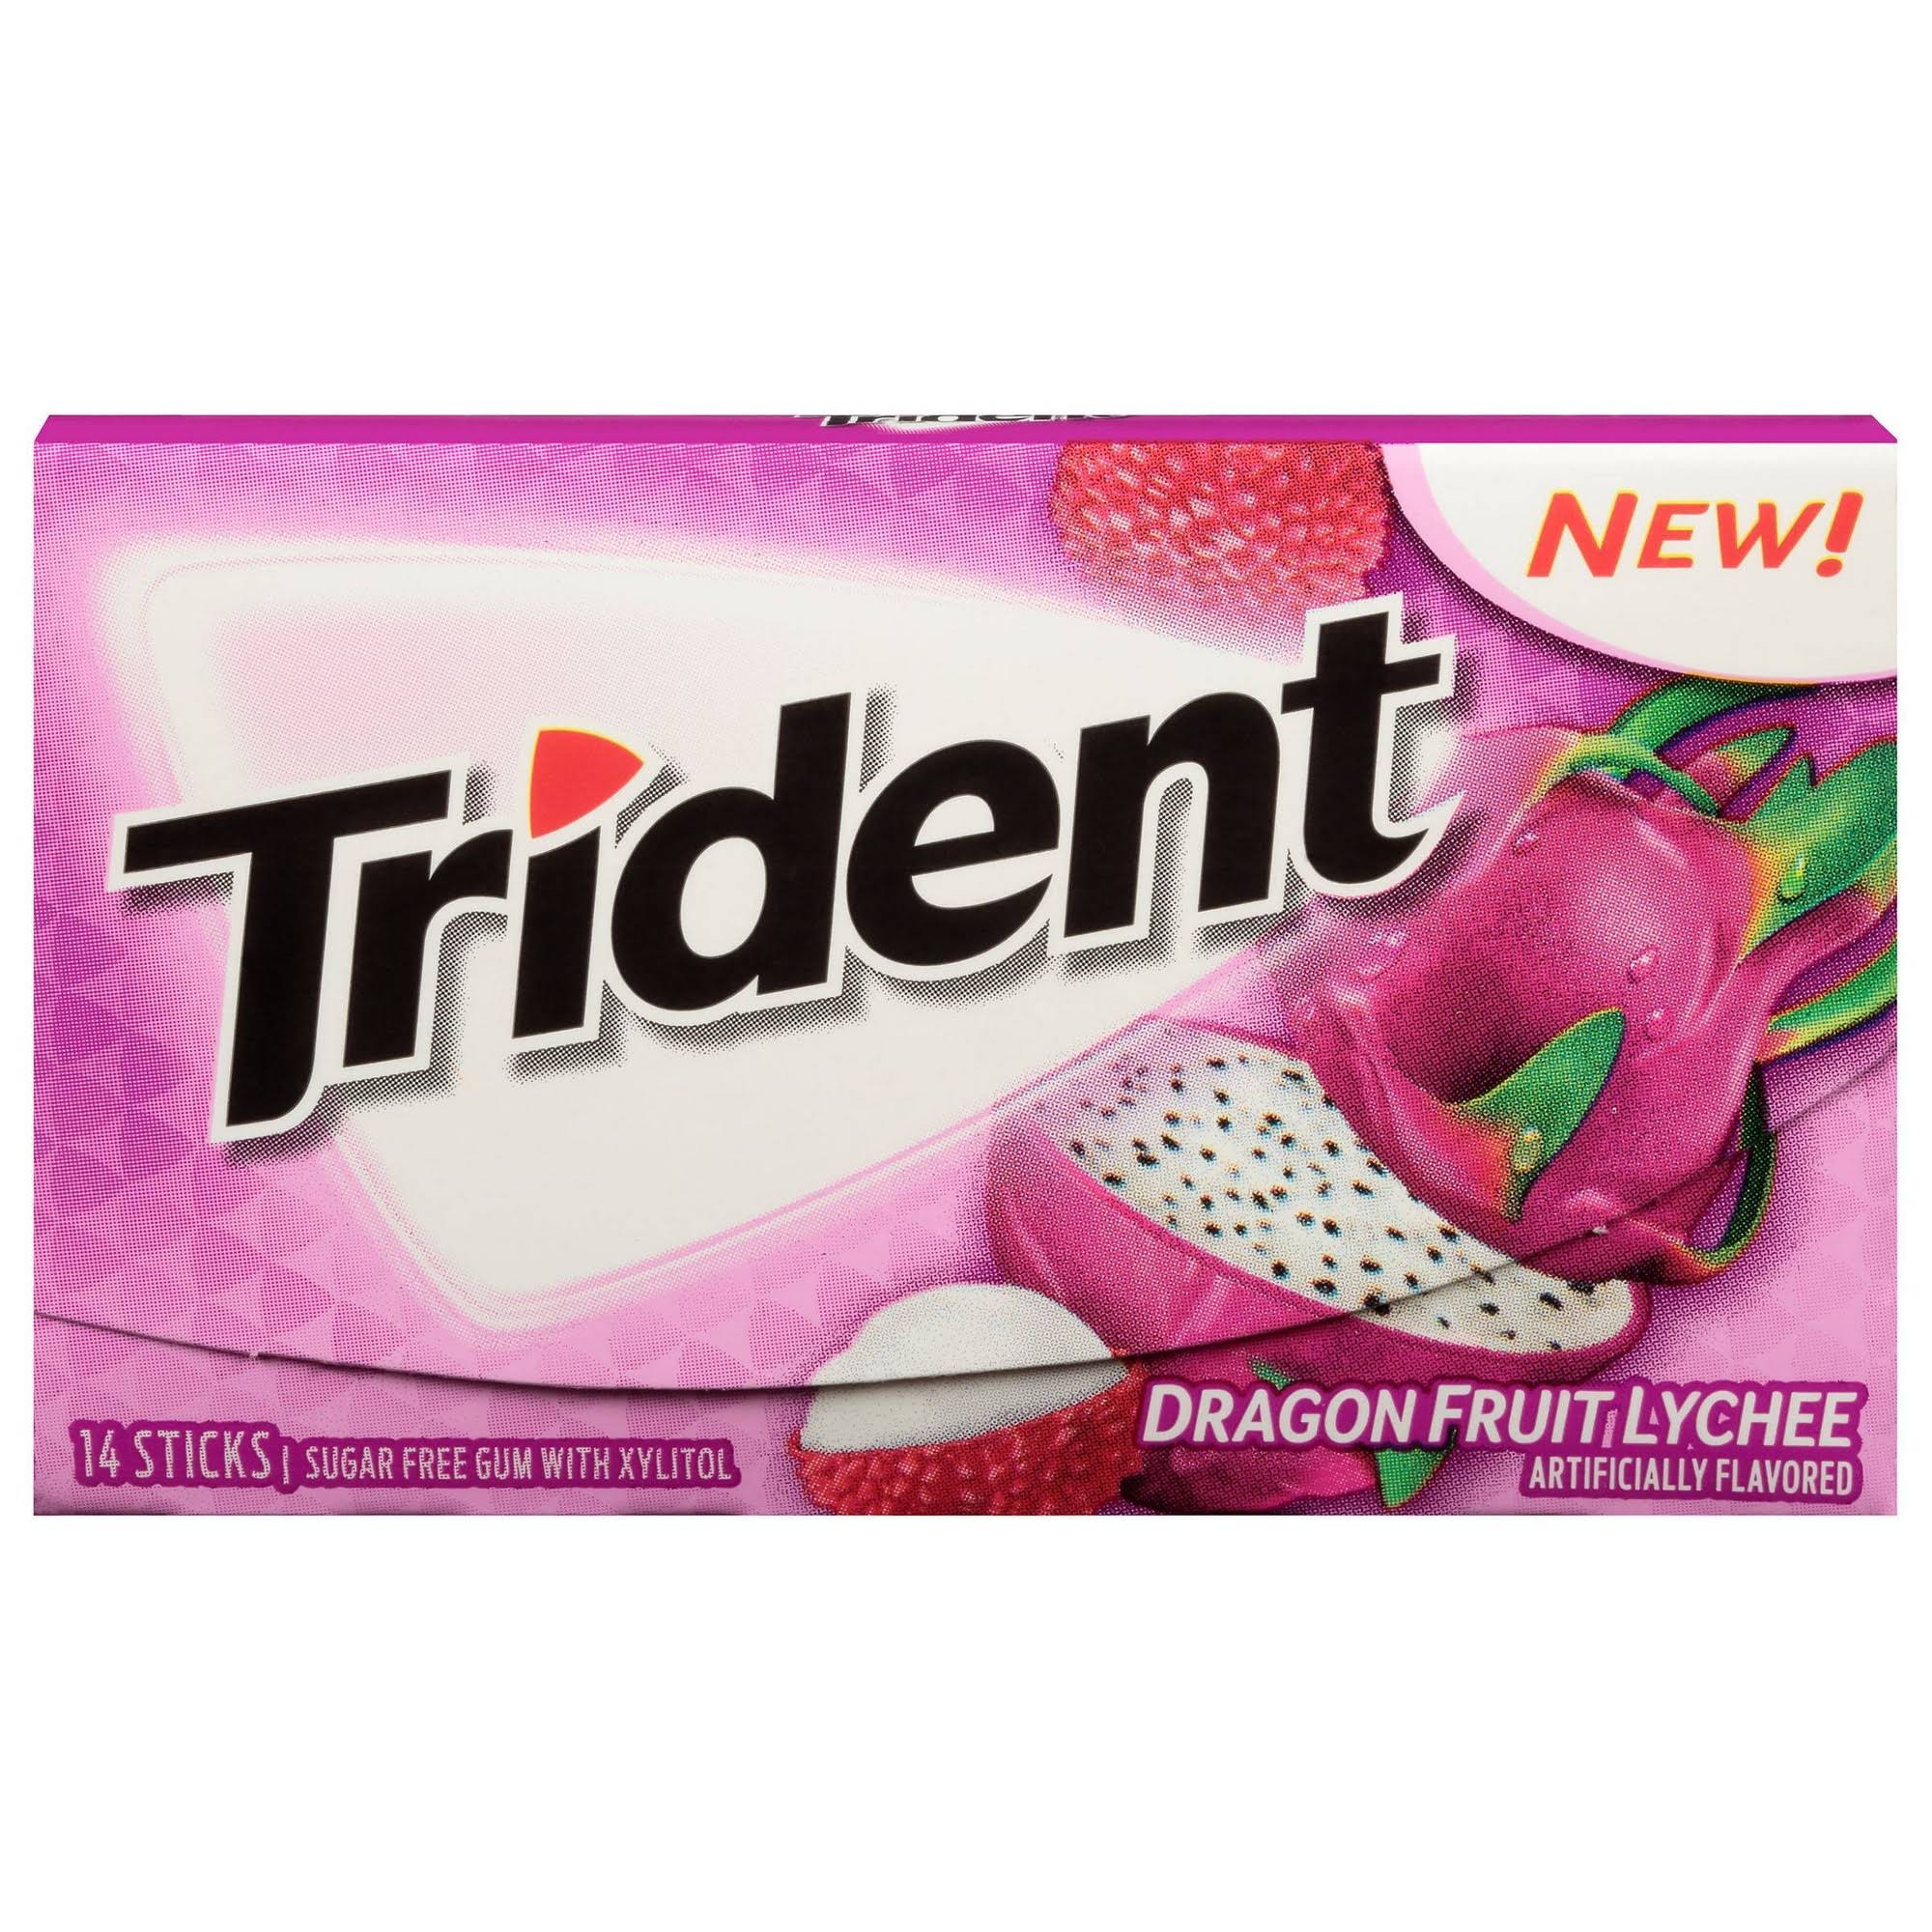 Trident Gum, Sugar Free, Dragon Fruit Lychee - 14 sticks